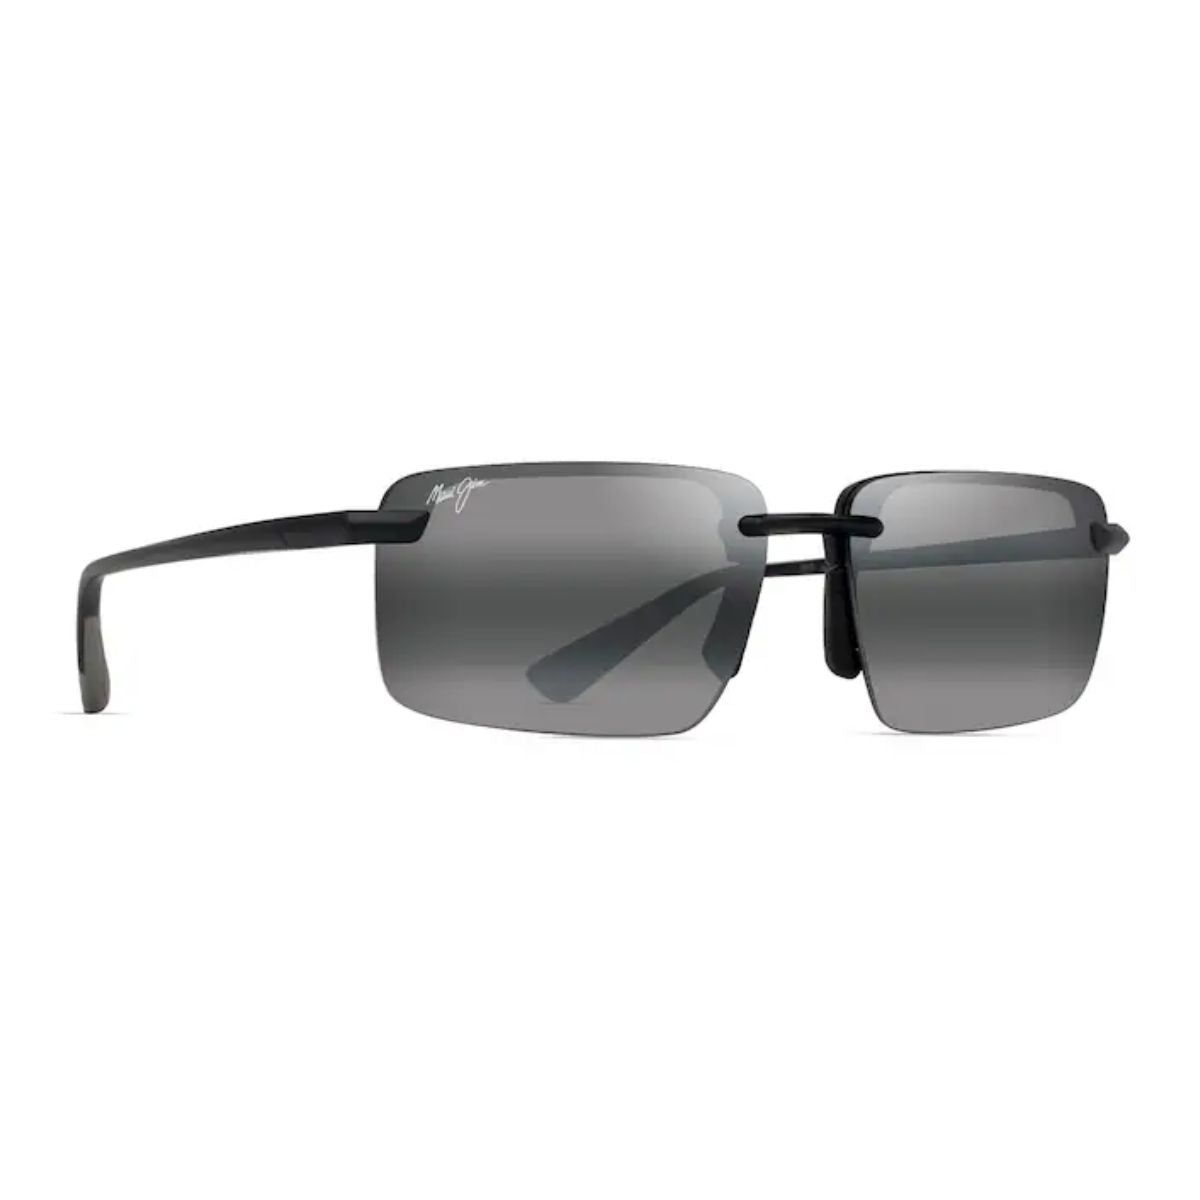 "Shop Stylish Mauijim Polarized Sunglasses For Mens At Optorium"